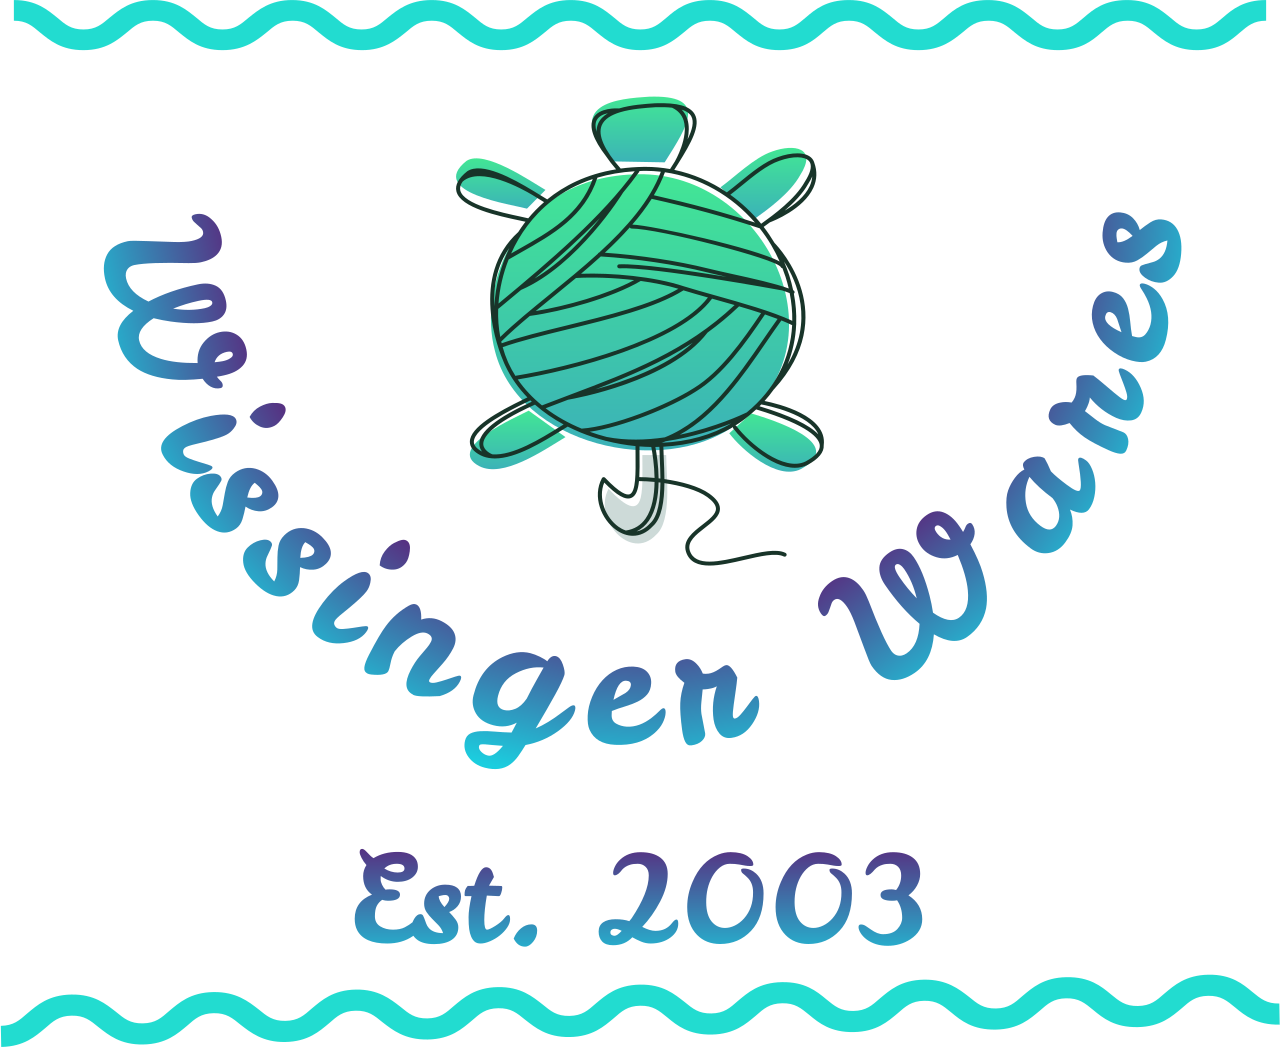 Wissinger Wares's logo